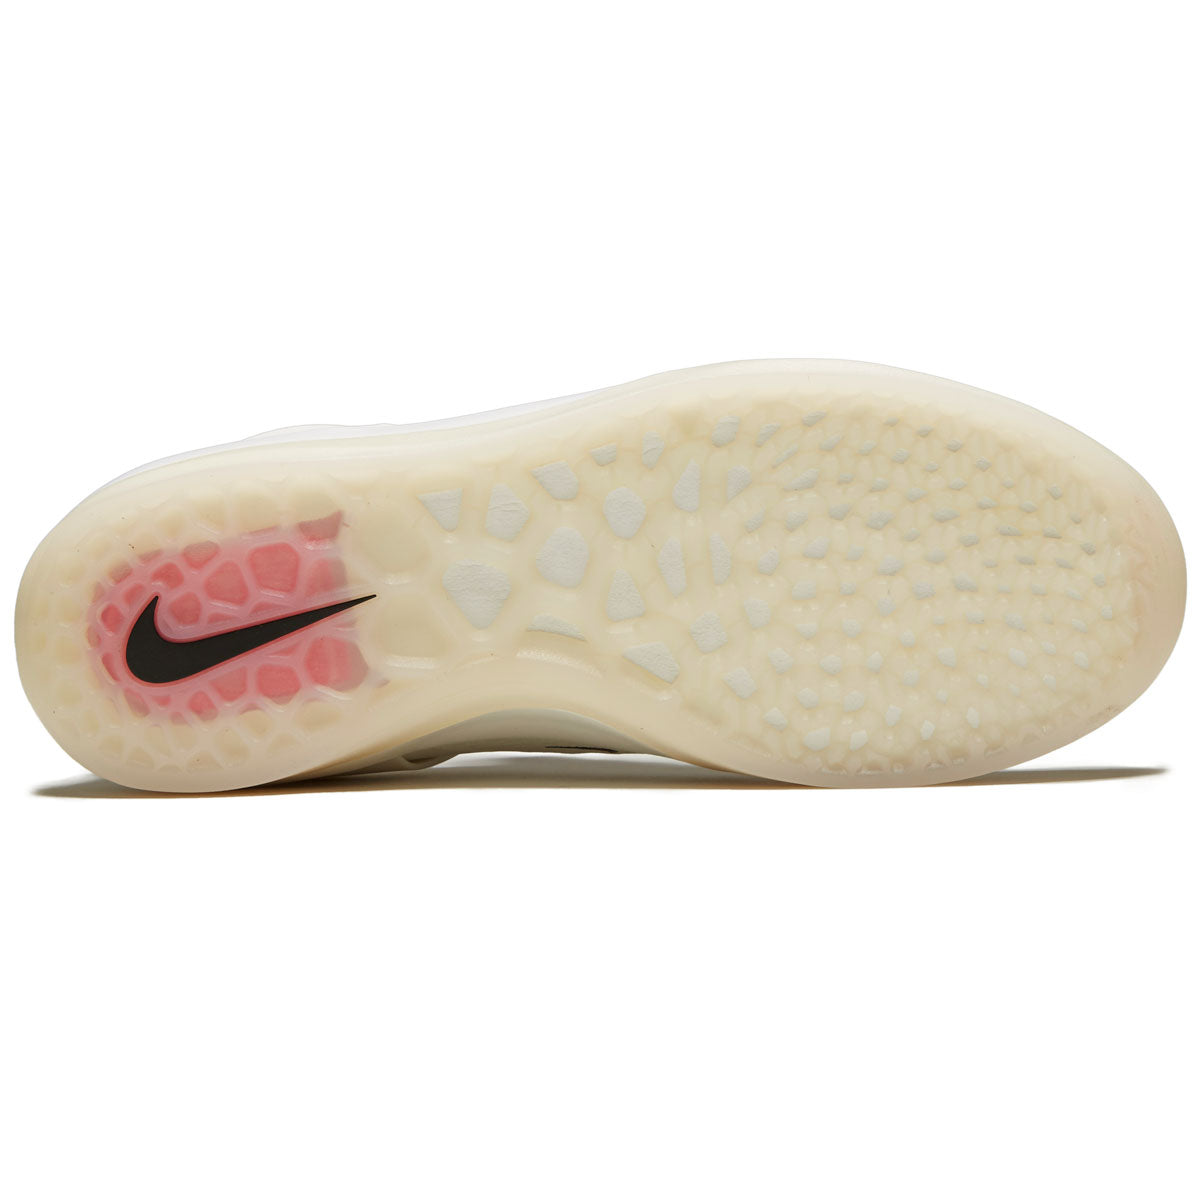 Nike SB Zoom Nyjah 3 Shoes - White/Black/Summit White/Hyper Pink image 4